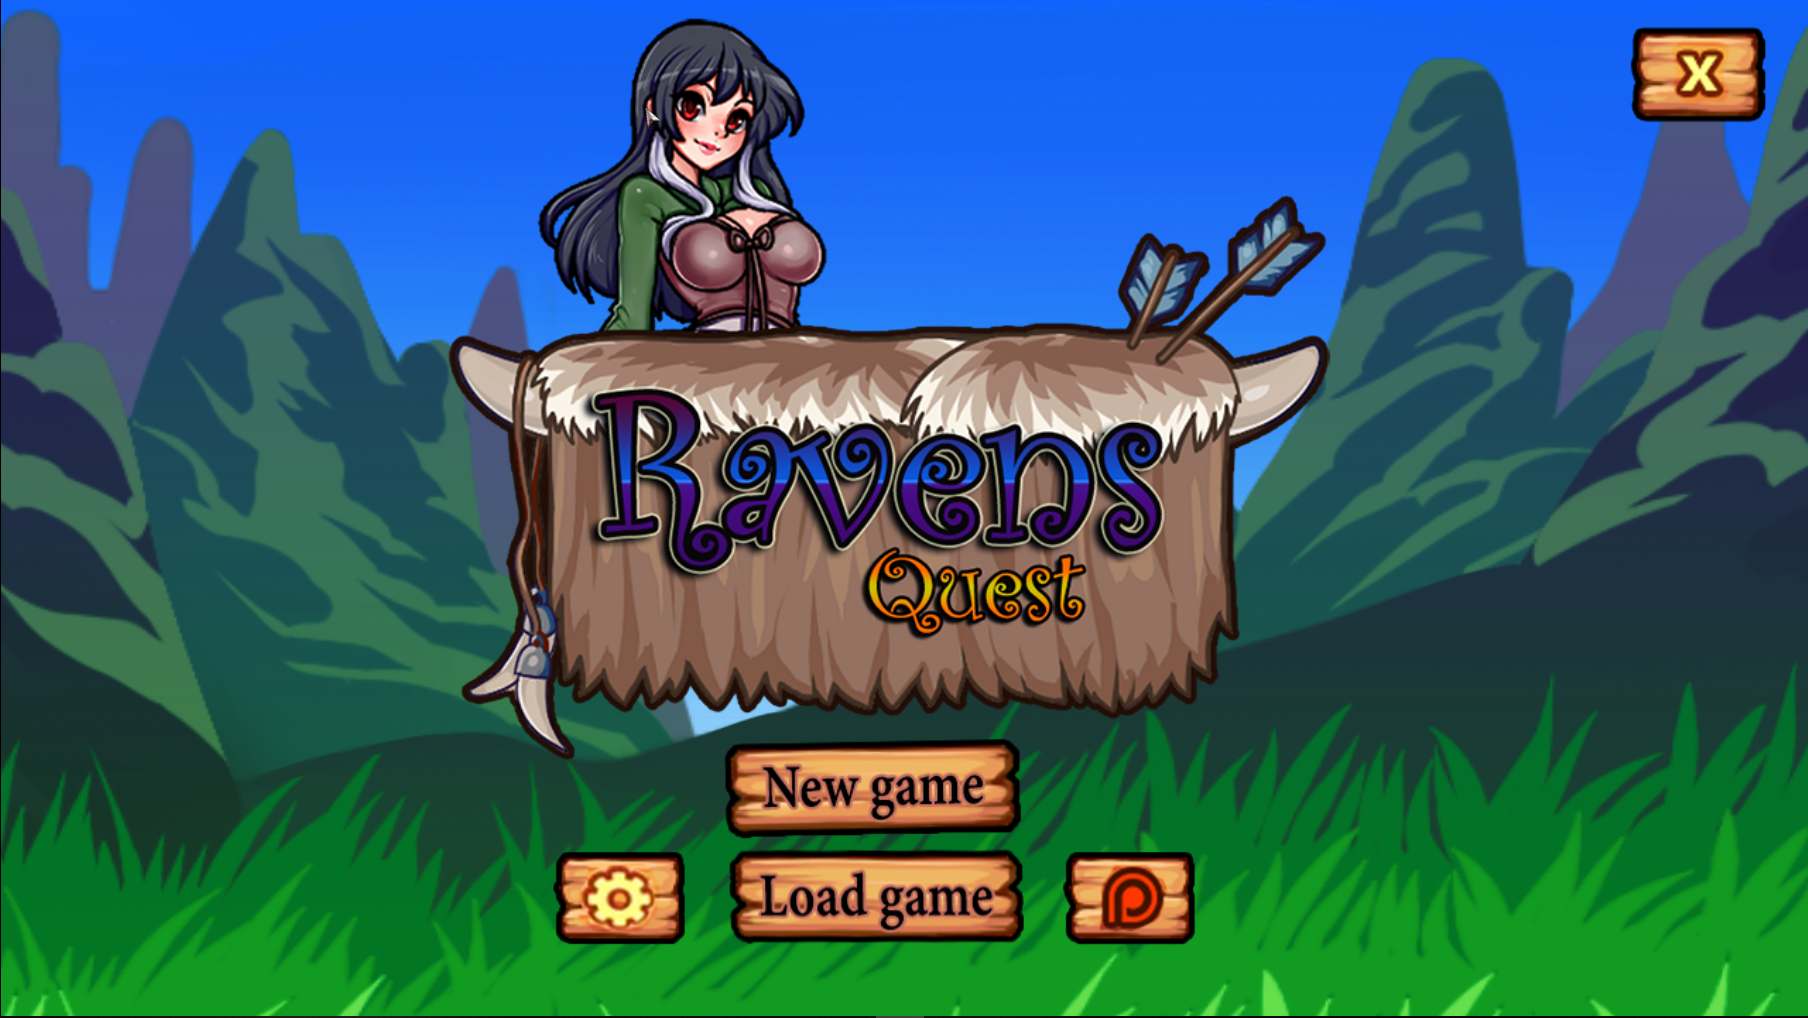 Raven's quest project artofzoo